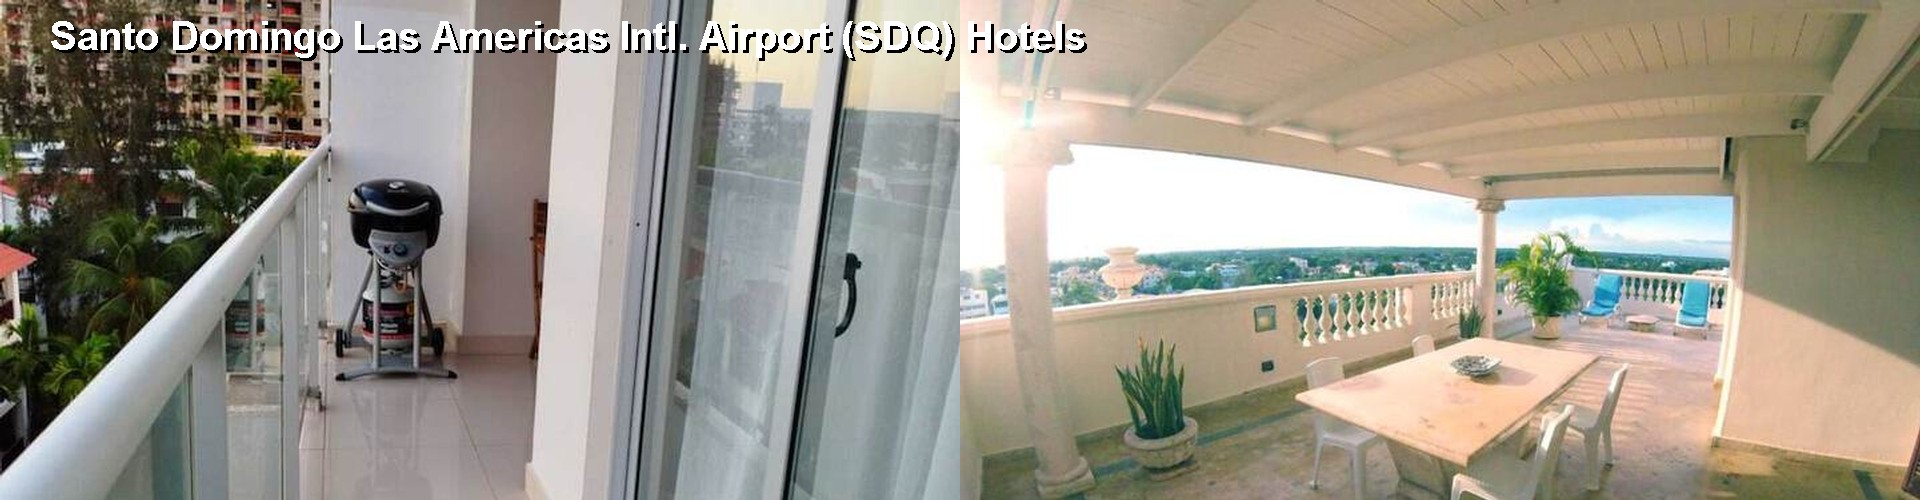 4 Best Hotels near Santo Domingo Las Americas Intl. Airport (SDQ)